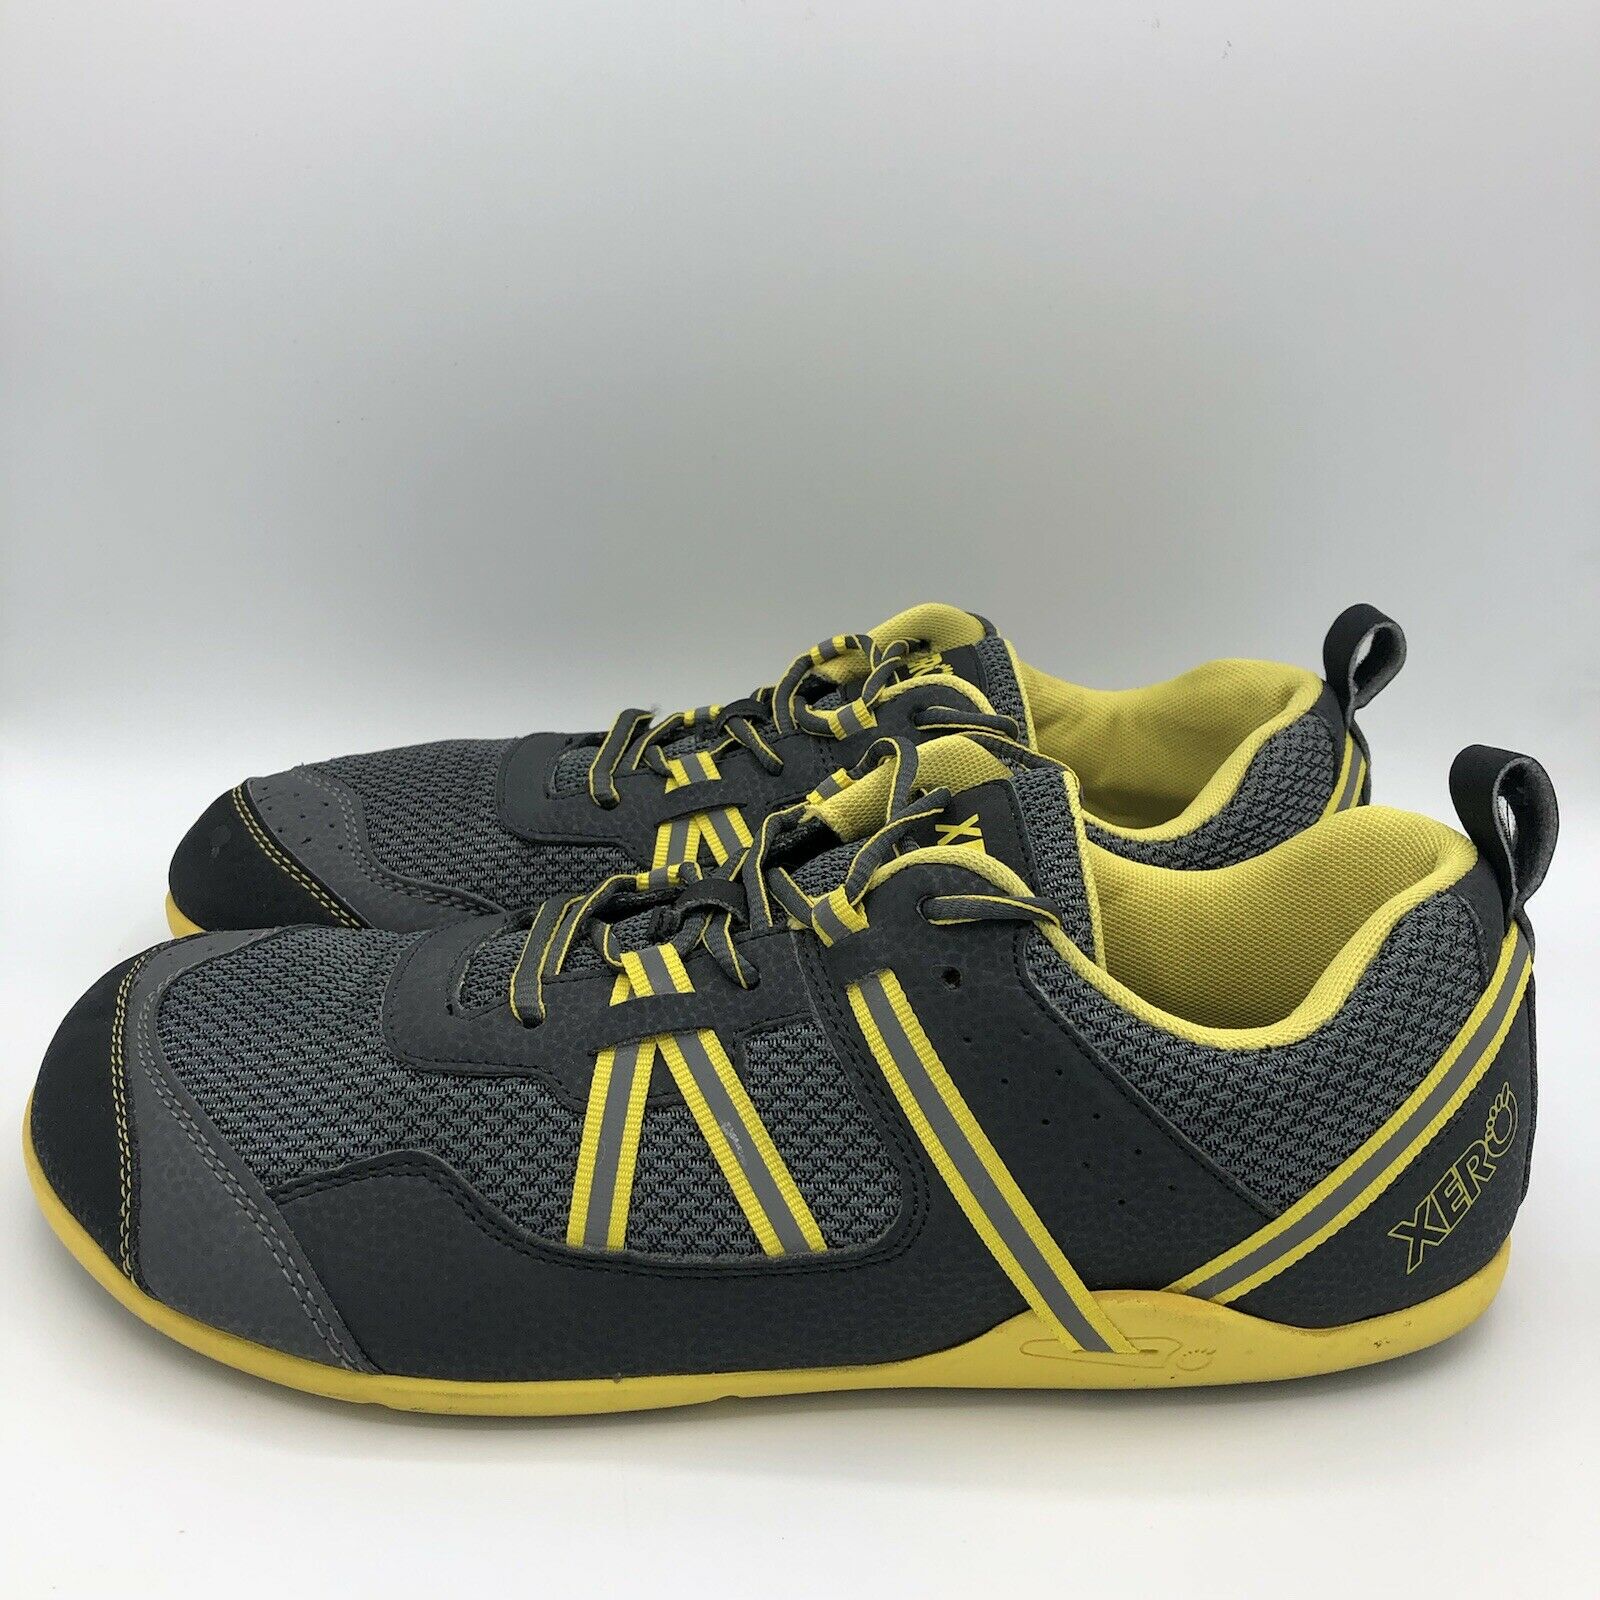 Xero Shoes Prio Minimalist Lightweight Running Shoes Gray Yellow Men's Size 11